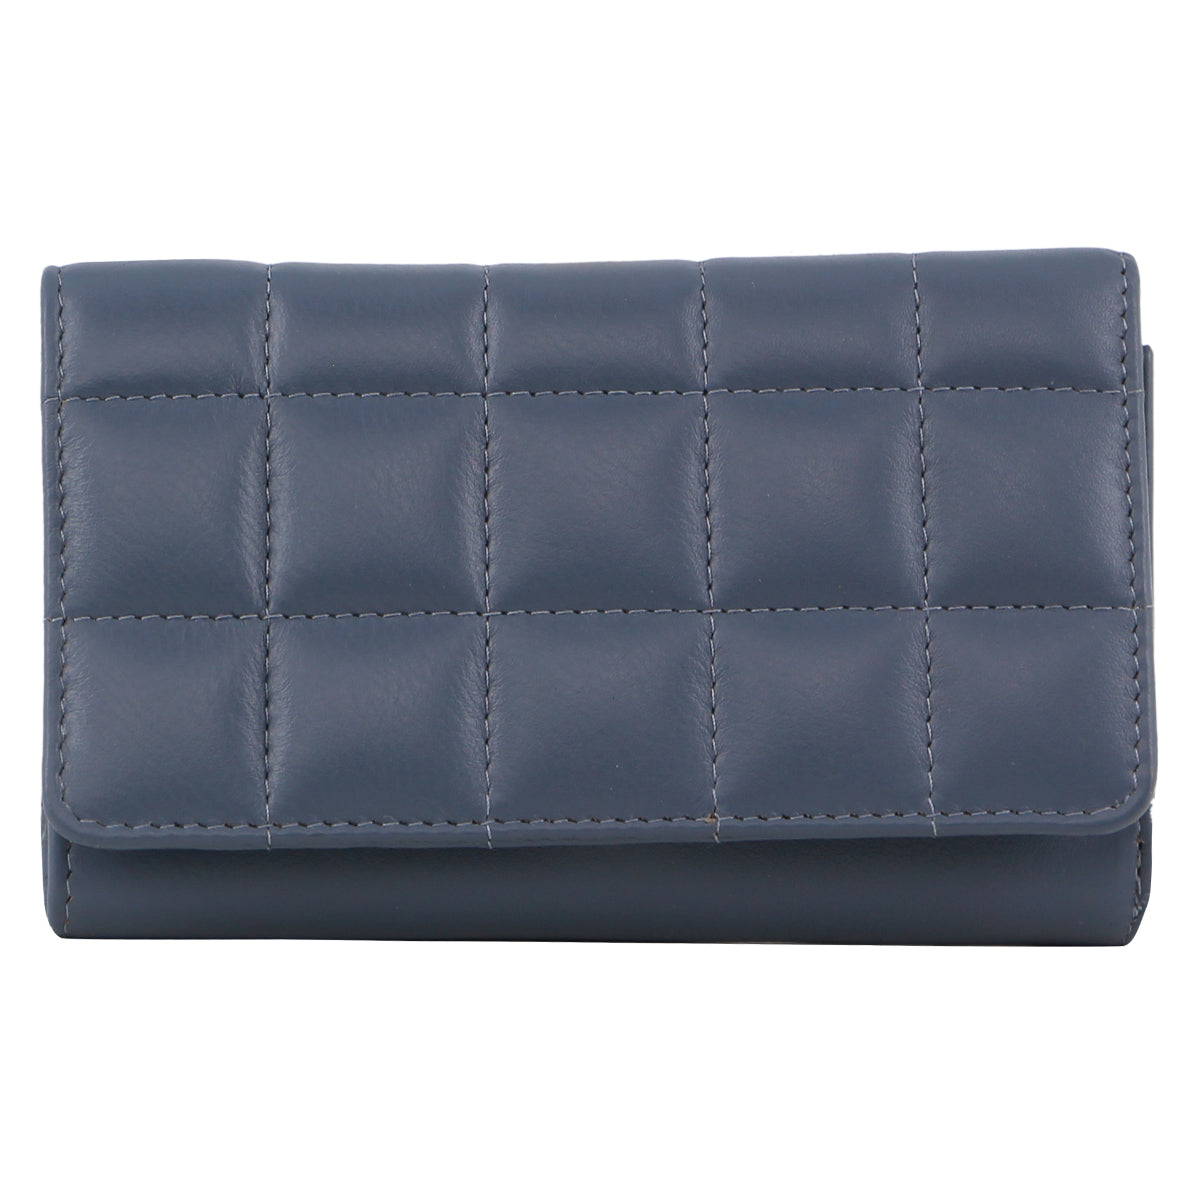 Pierre Cardin Pleated Leather Ladies Tri-Fold Wallet in Teal